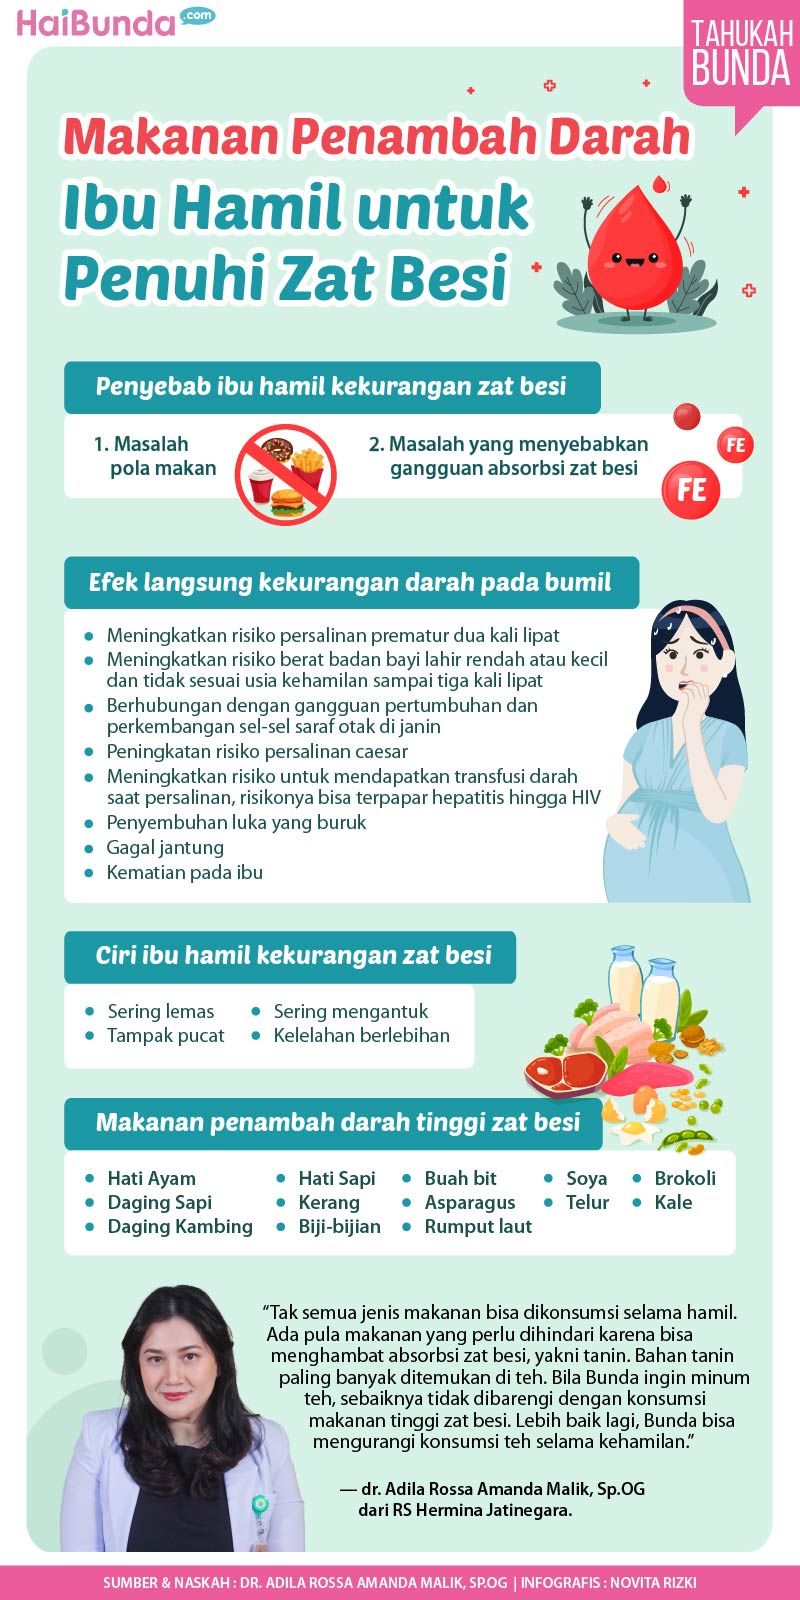 Daftar makanan penambah darah untuk ibu hamil